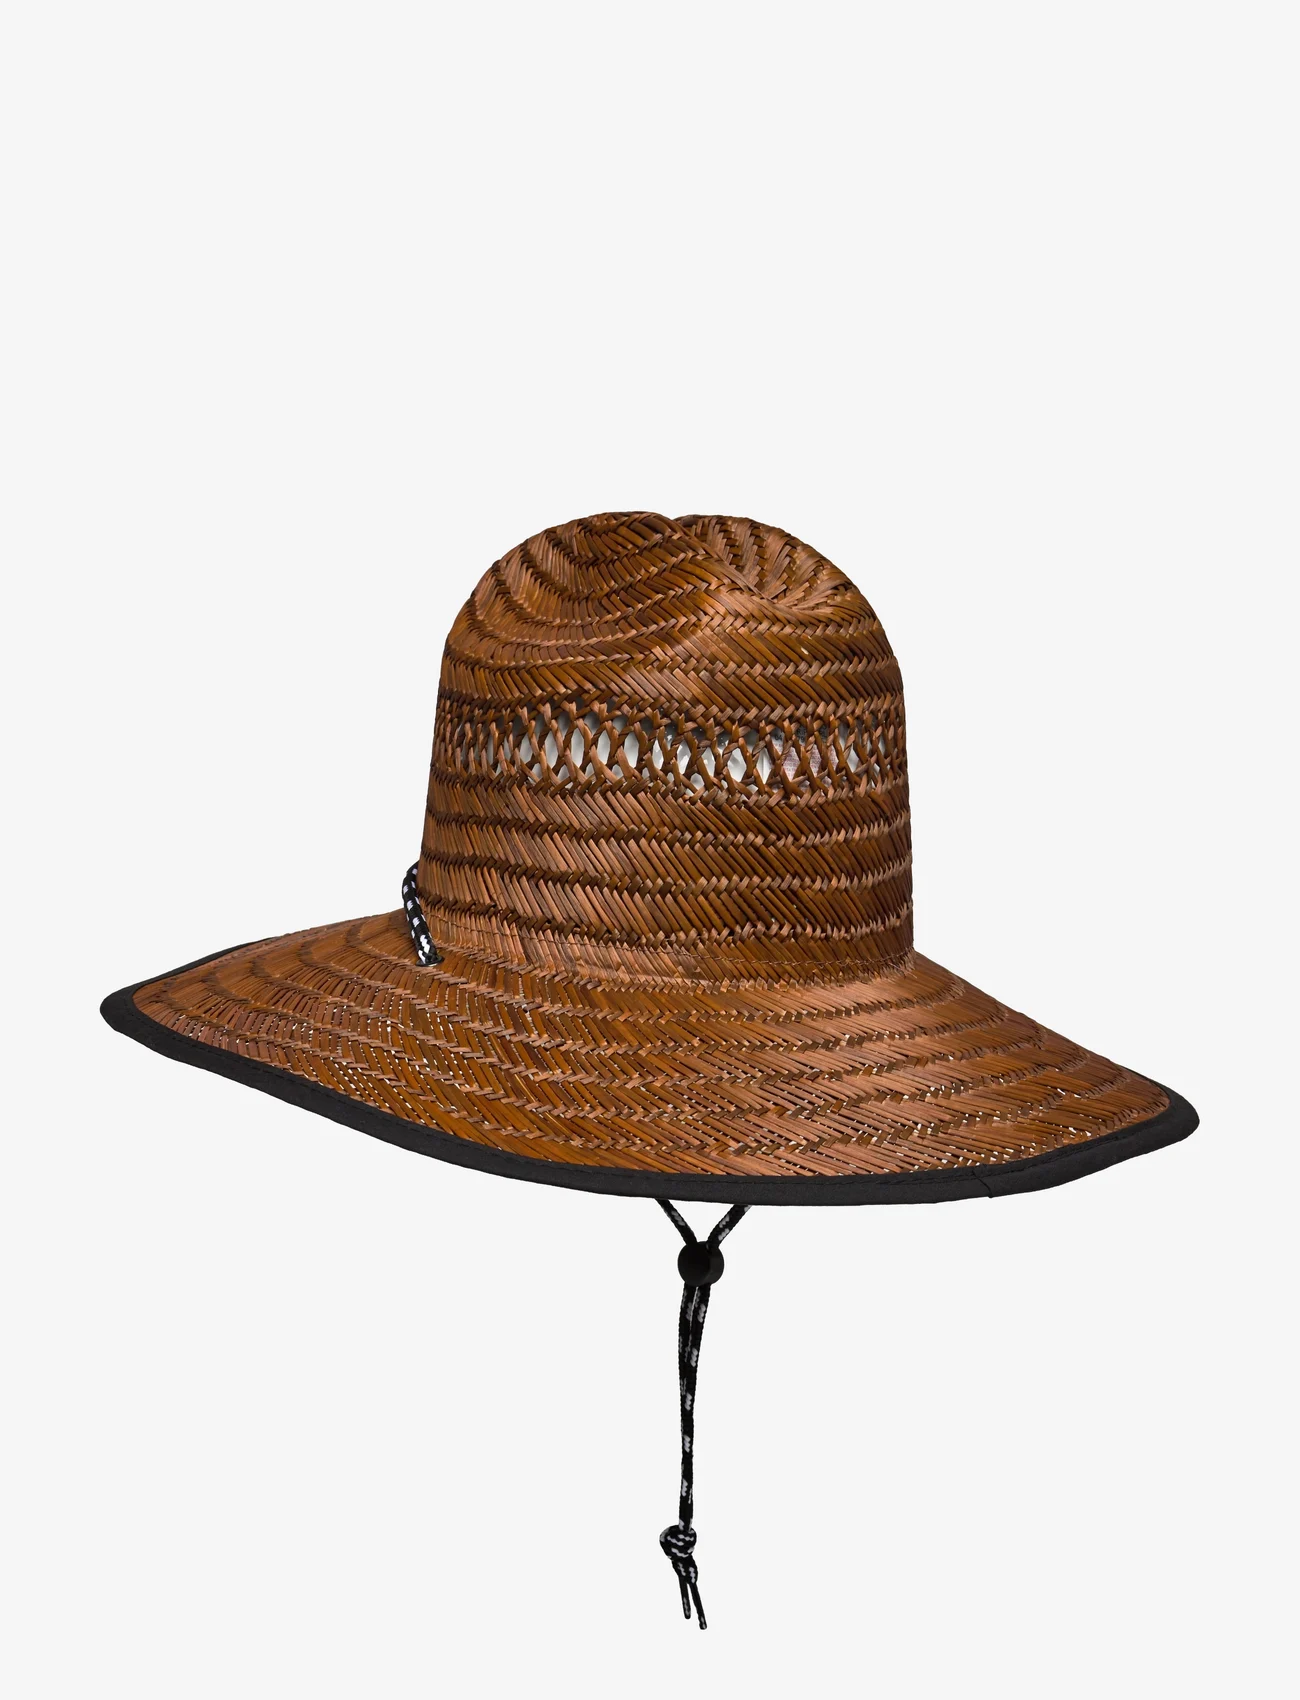 Rip Curl - LOGO STRAW HAT - hats - brown - 1